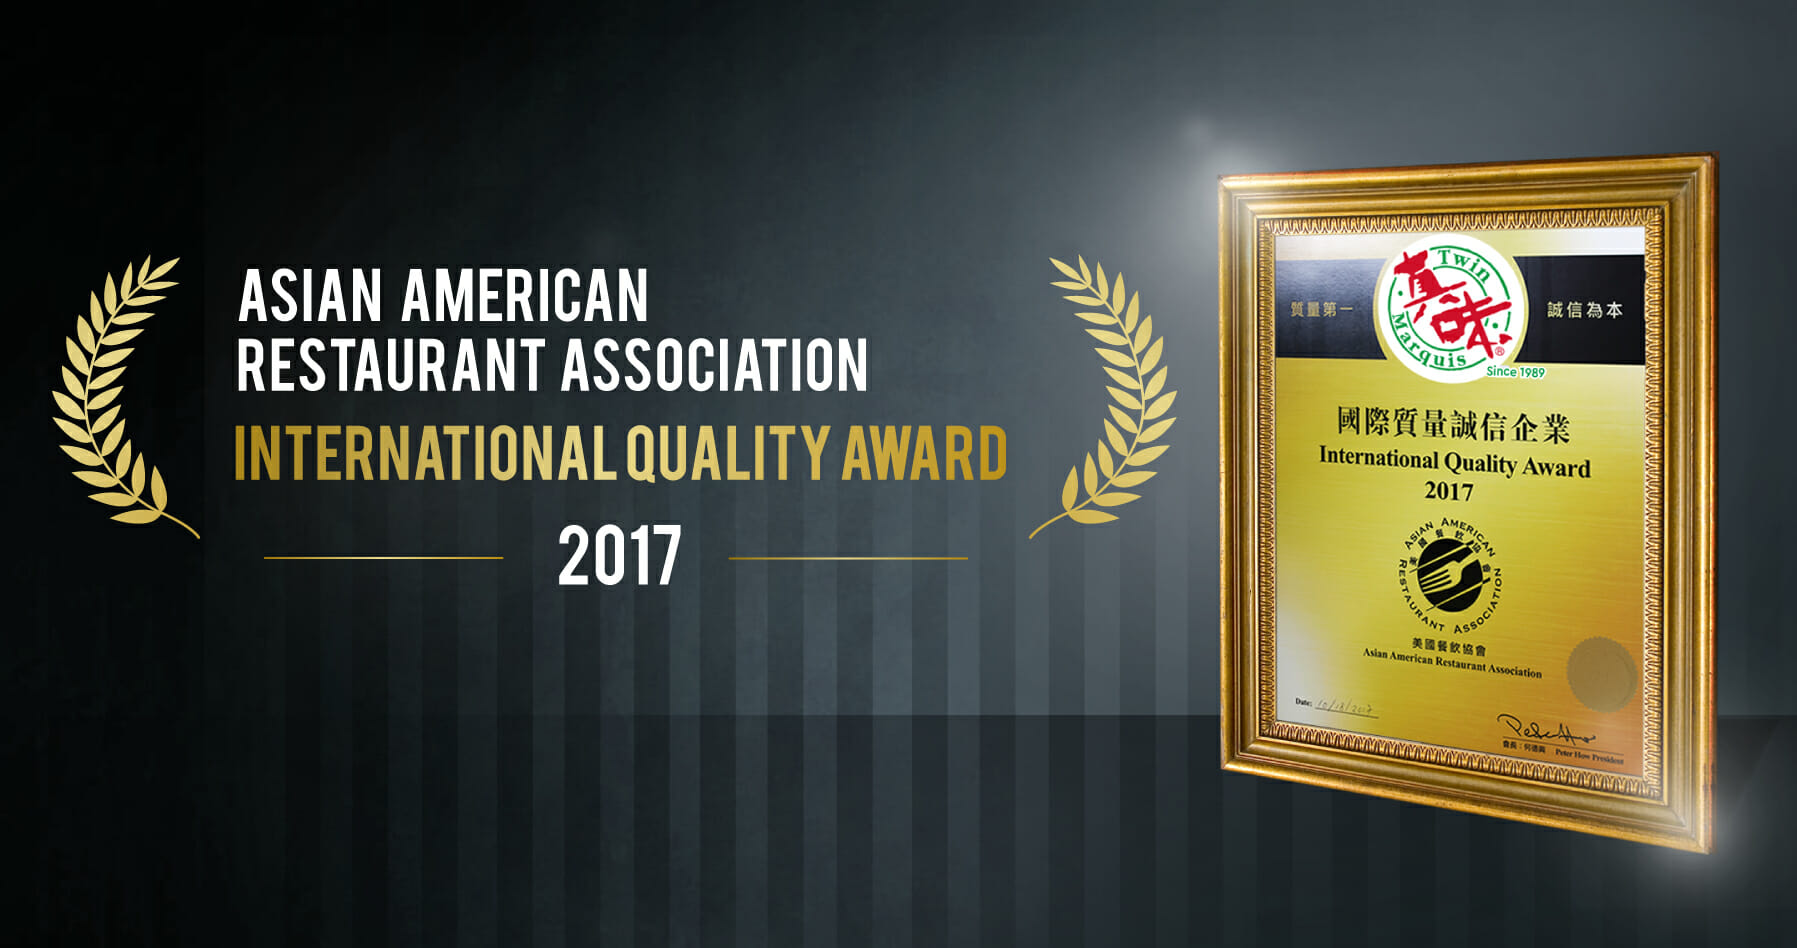 International Quality Award 2017